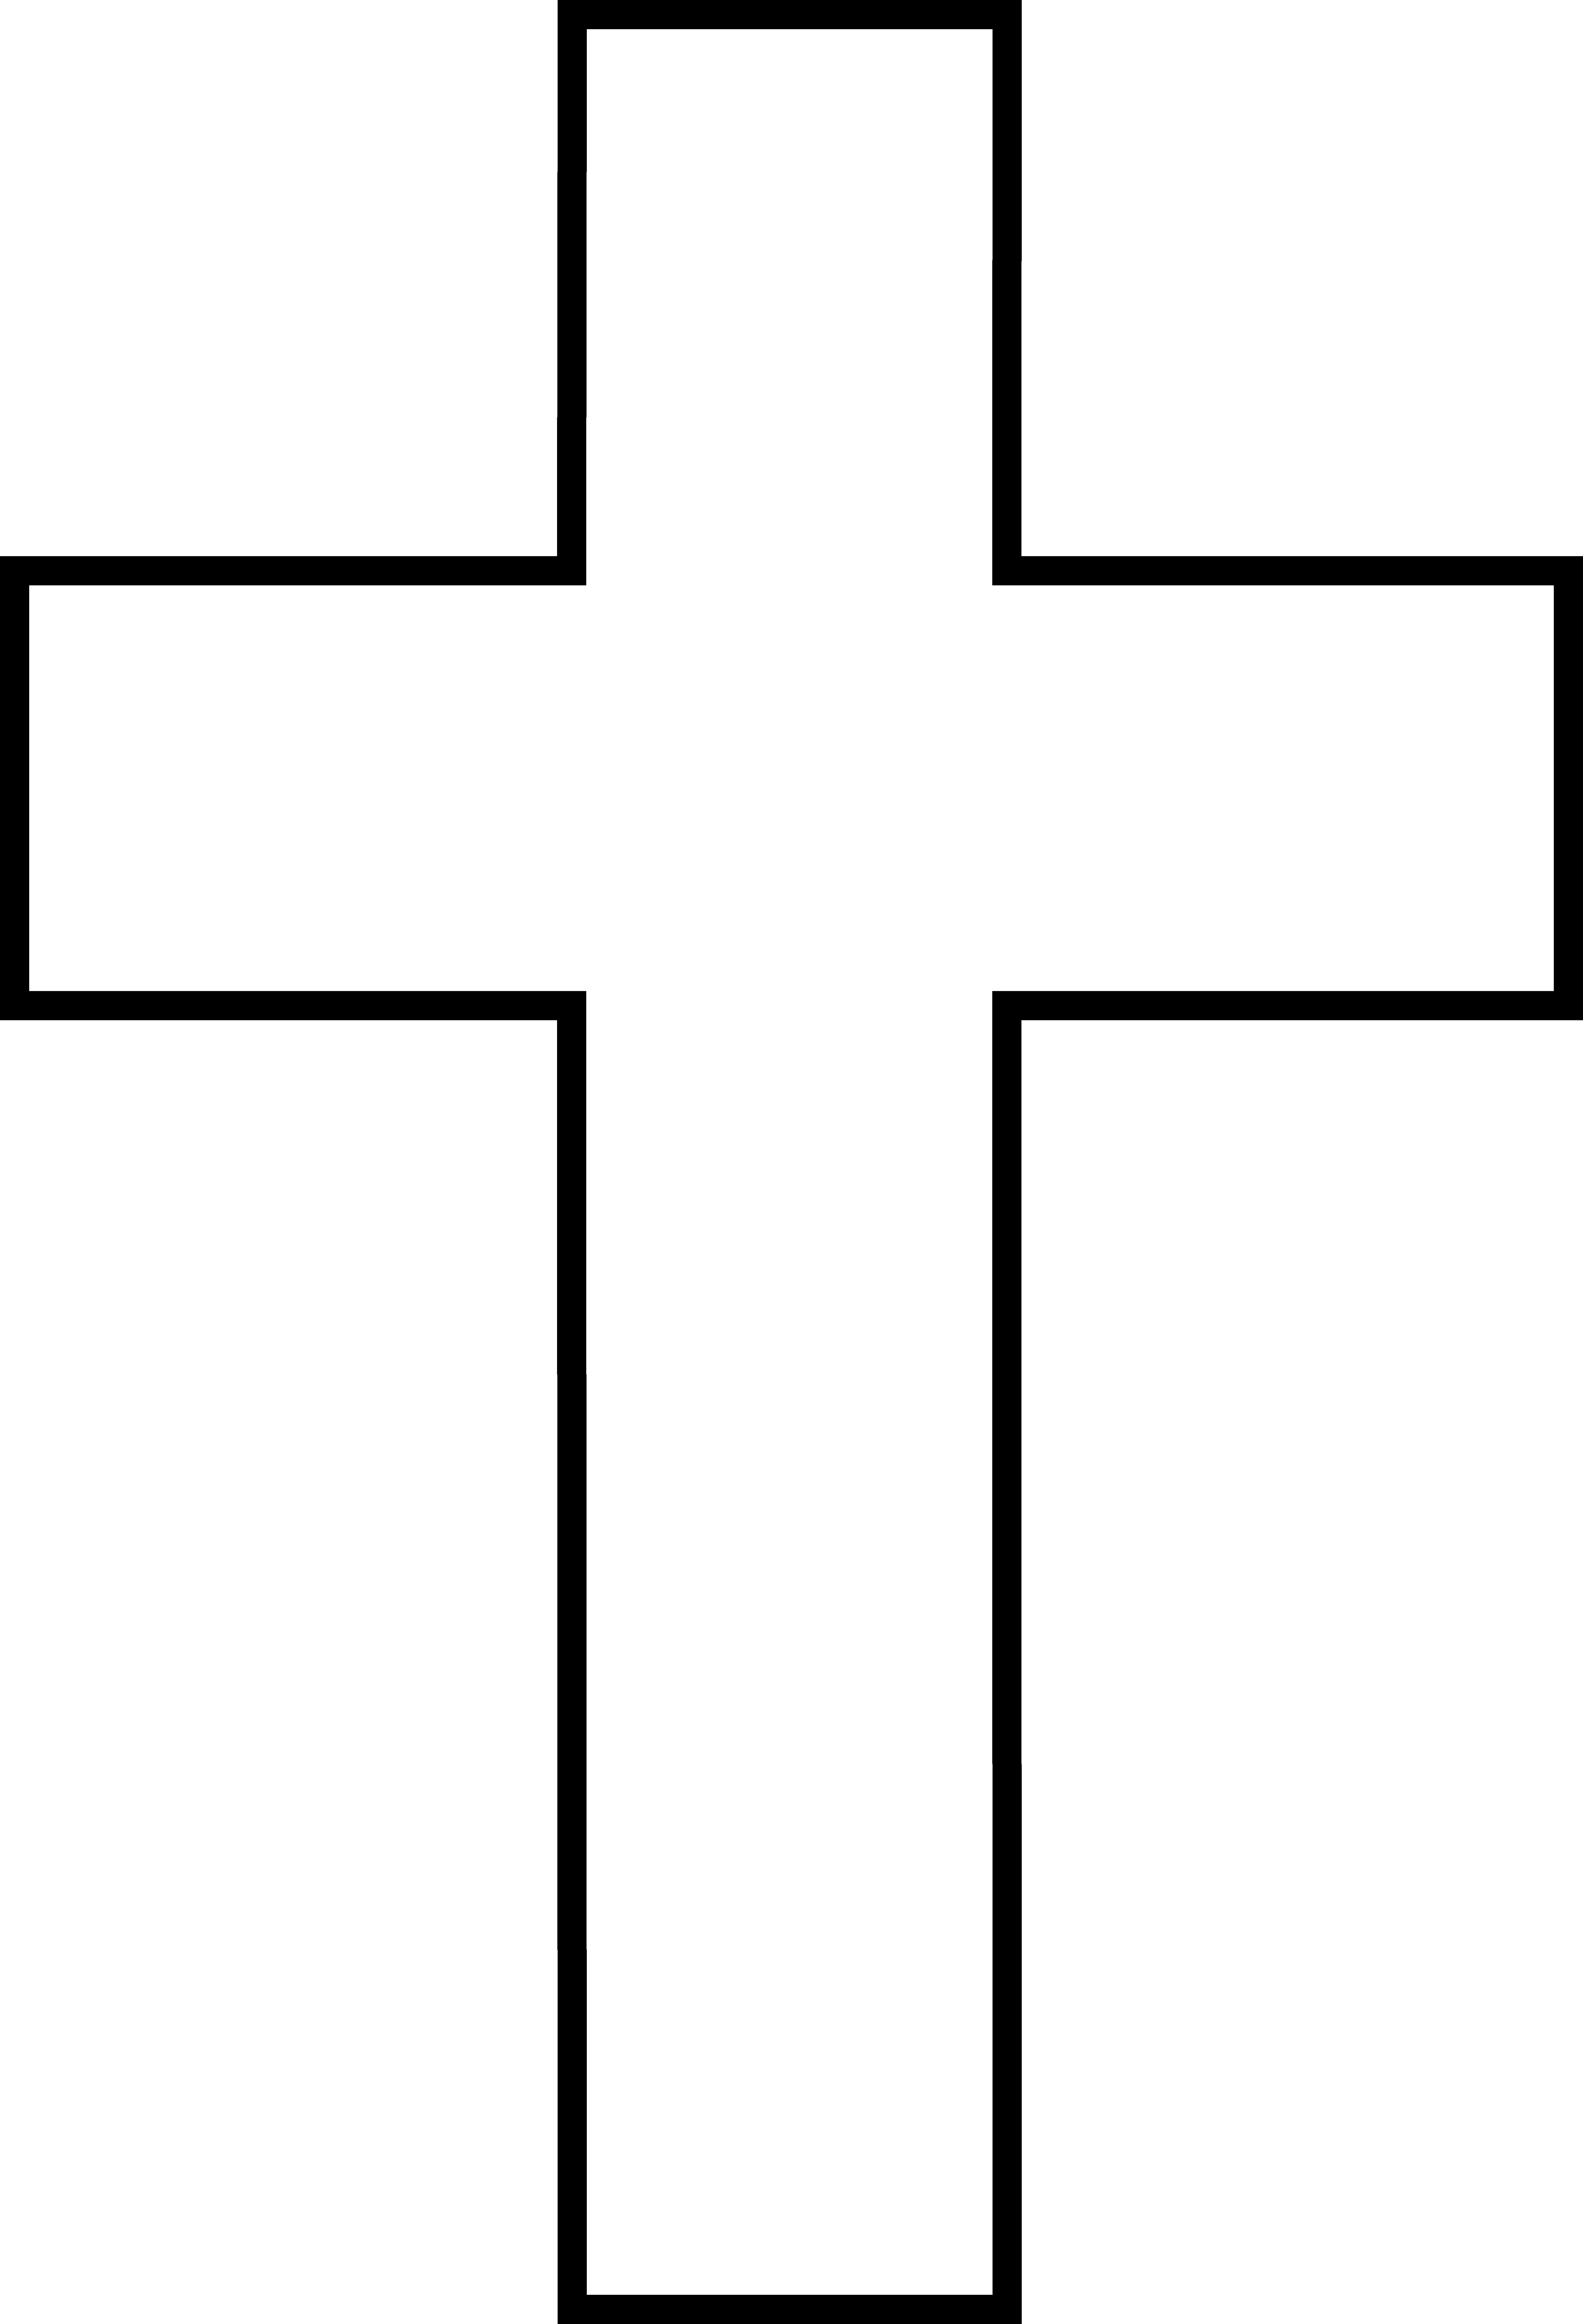 Best Photos of Cross Outline Clip Art - Black and White Crosses ...